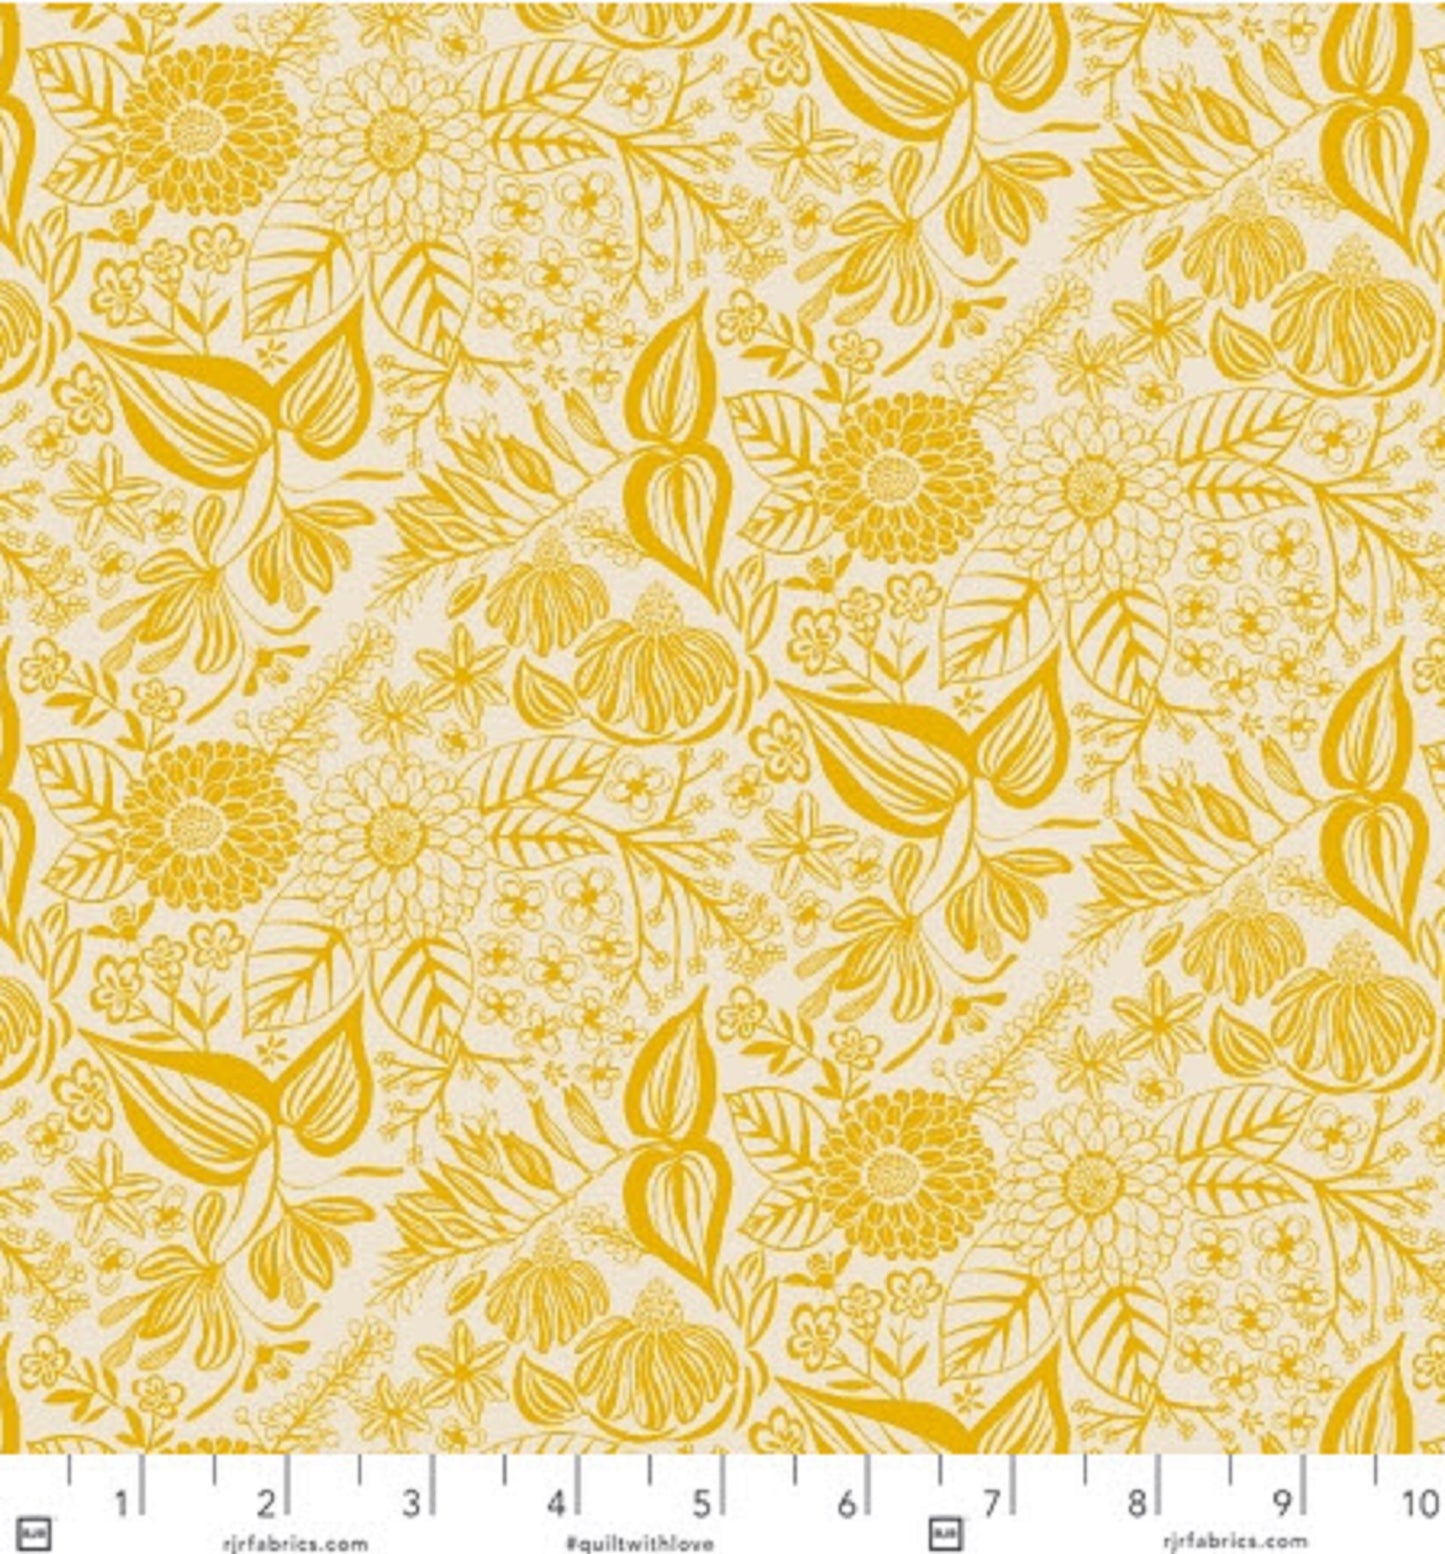 RJR Fabrics -  Elizabeth Halpern - Honeybee Garden - Fat Quarter Fabric Bundle 16pcs